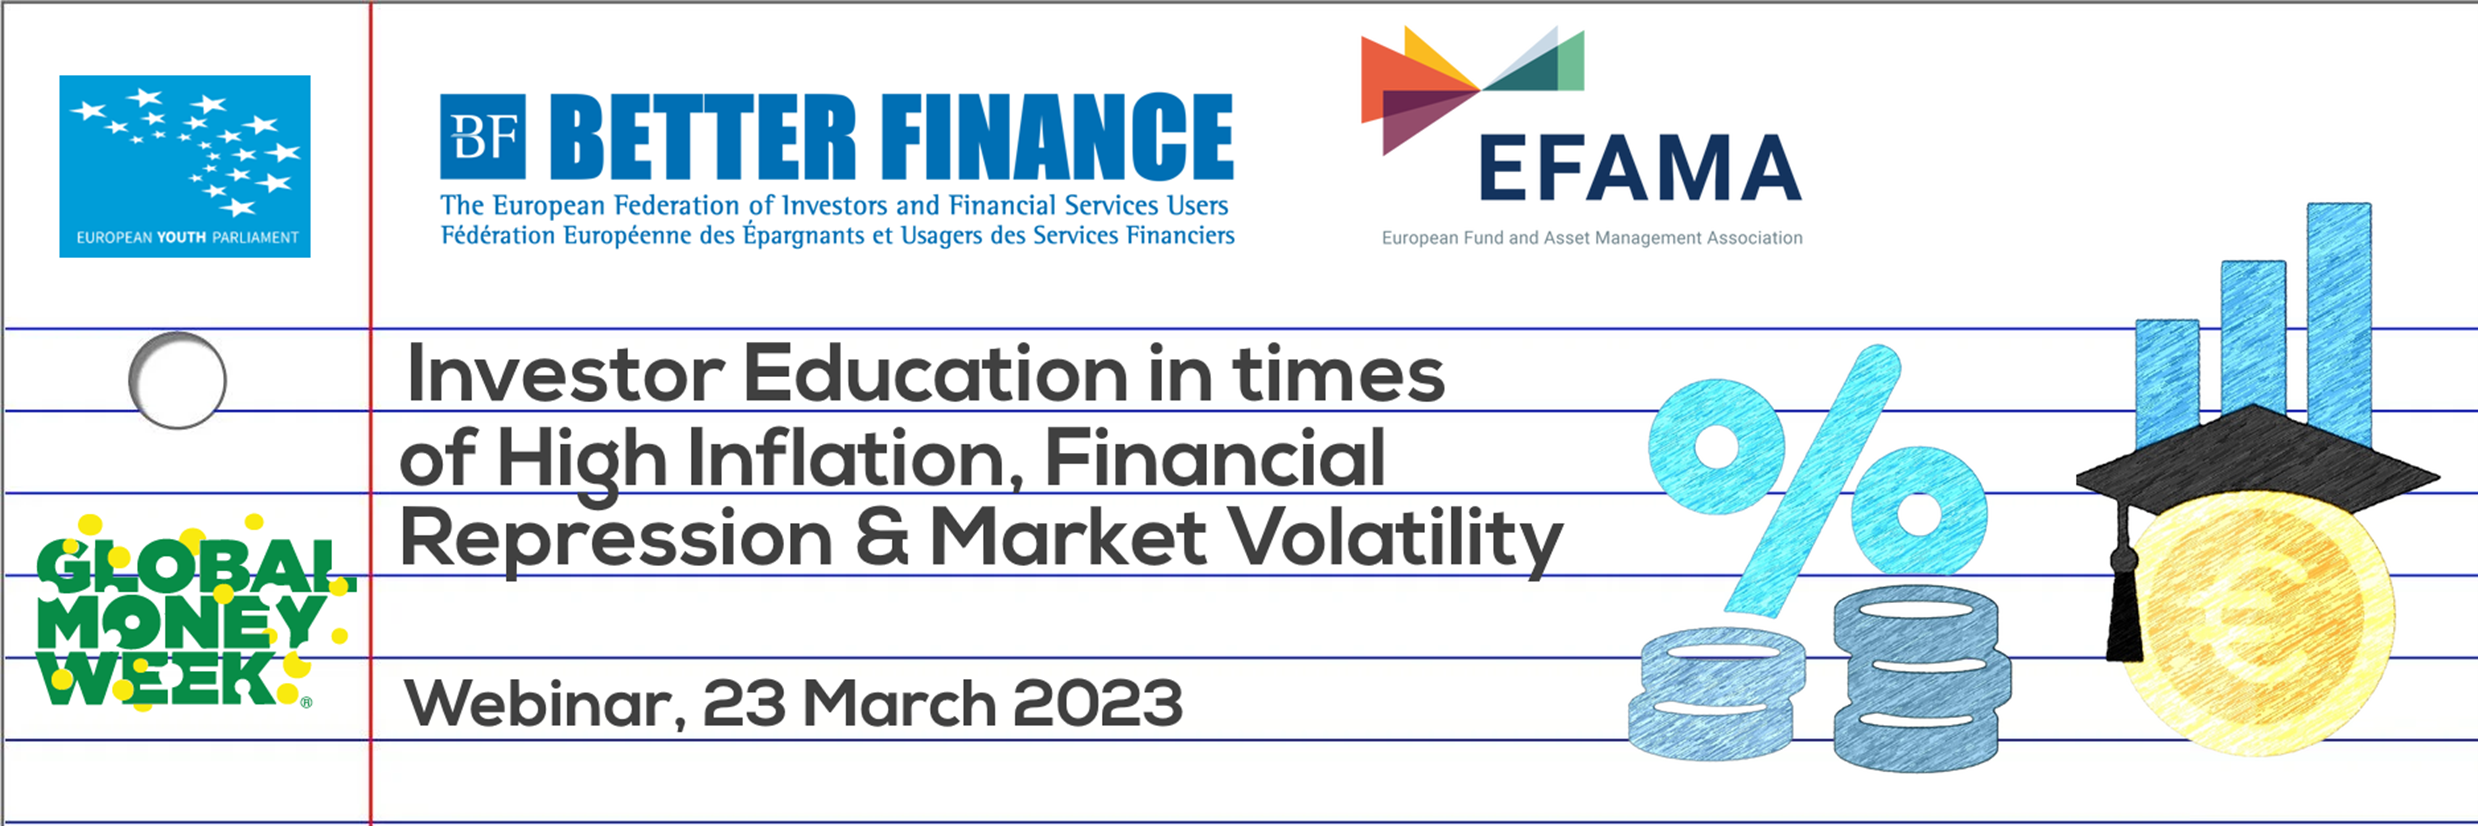 EFAMA Better Finance European Youth Forum Event Header for webinar